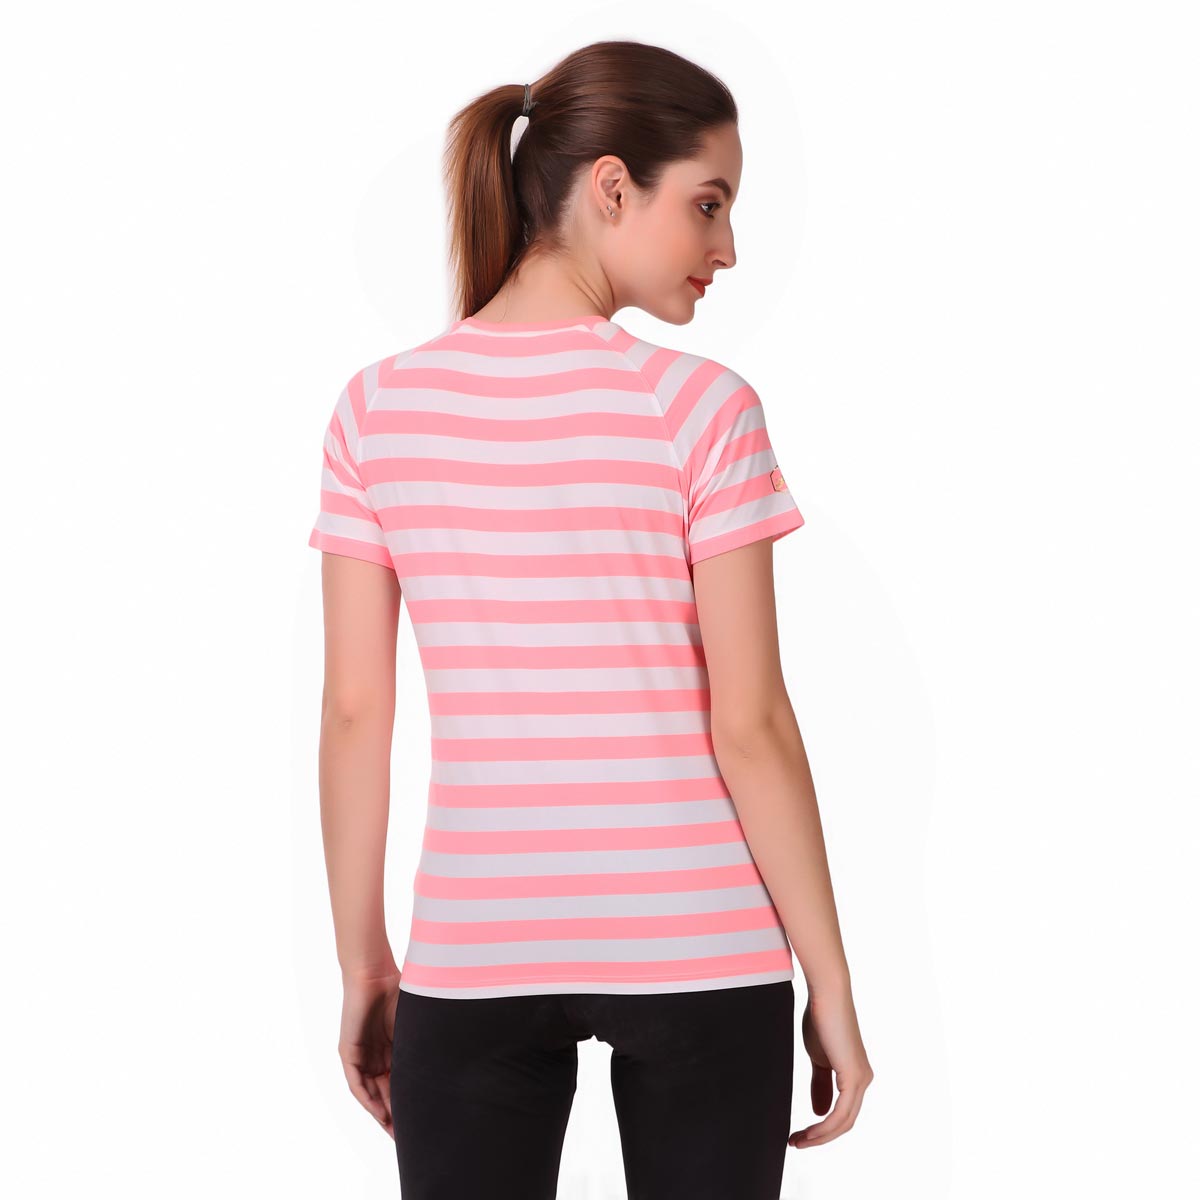 Cotton Stripes Tshirt For Women (Pink)